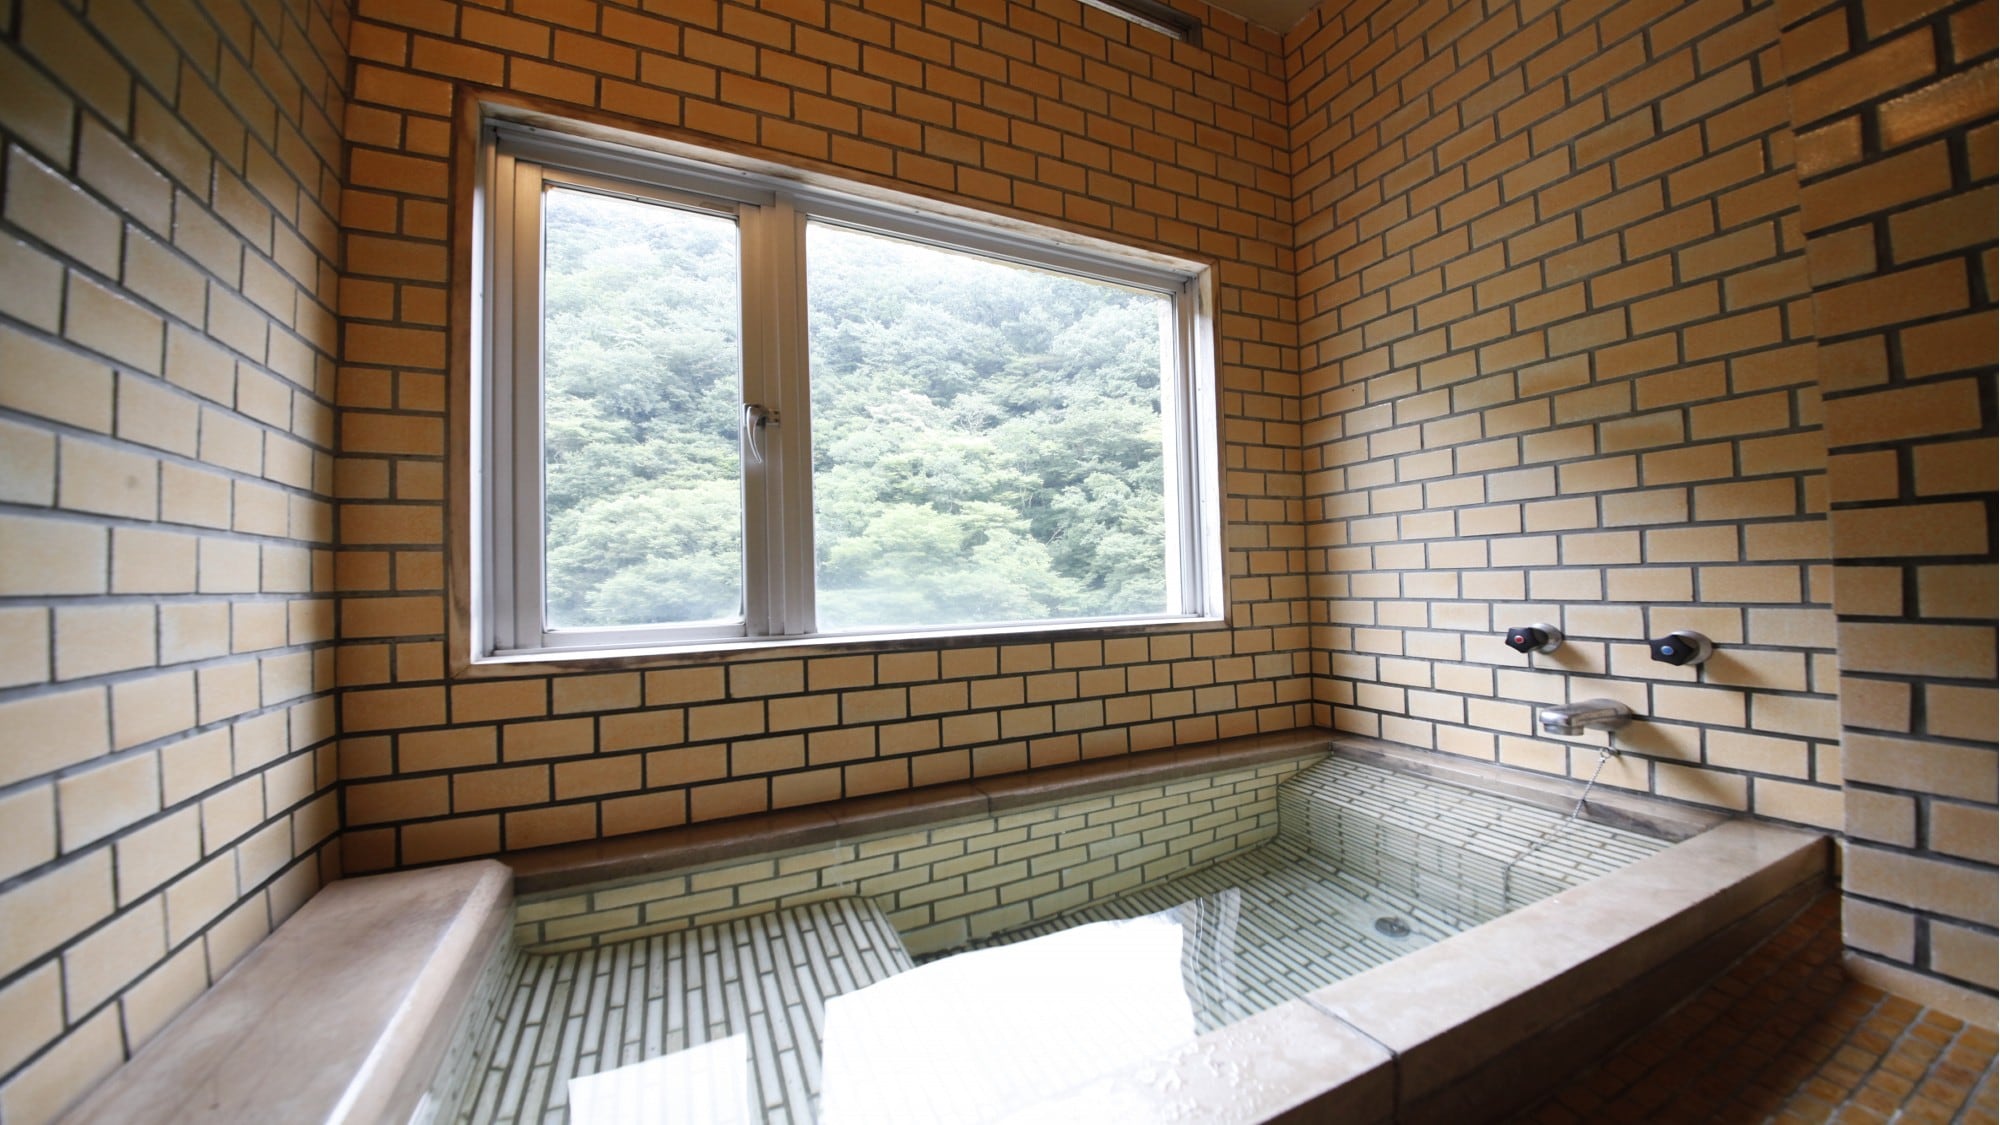 ★General Japanese/Western to Japanese indoor bath